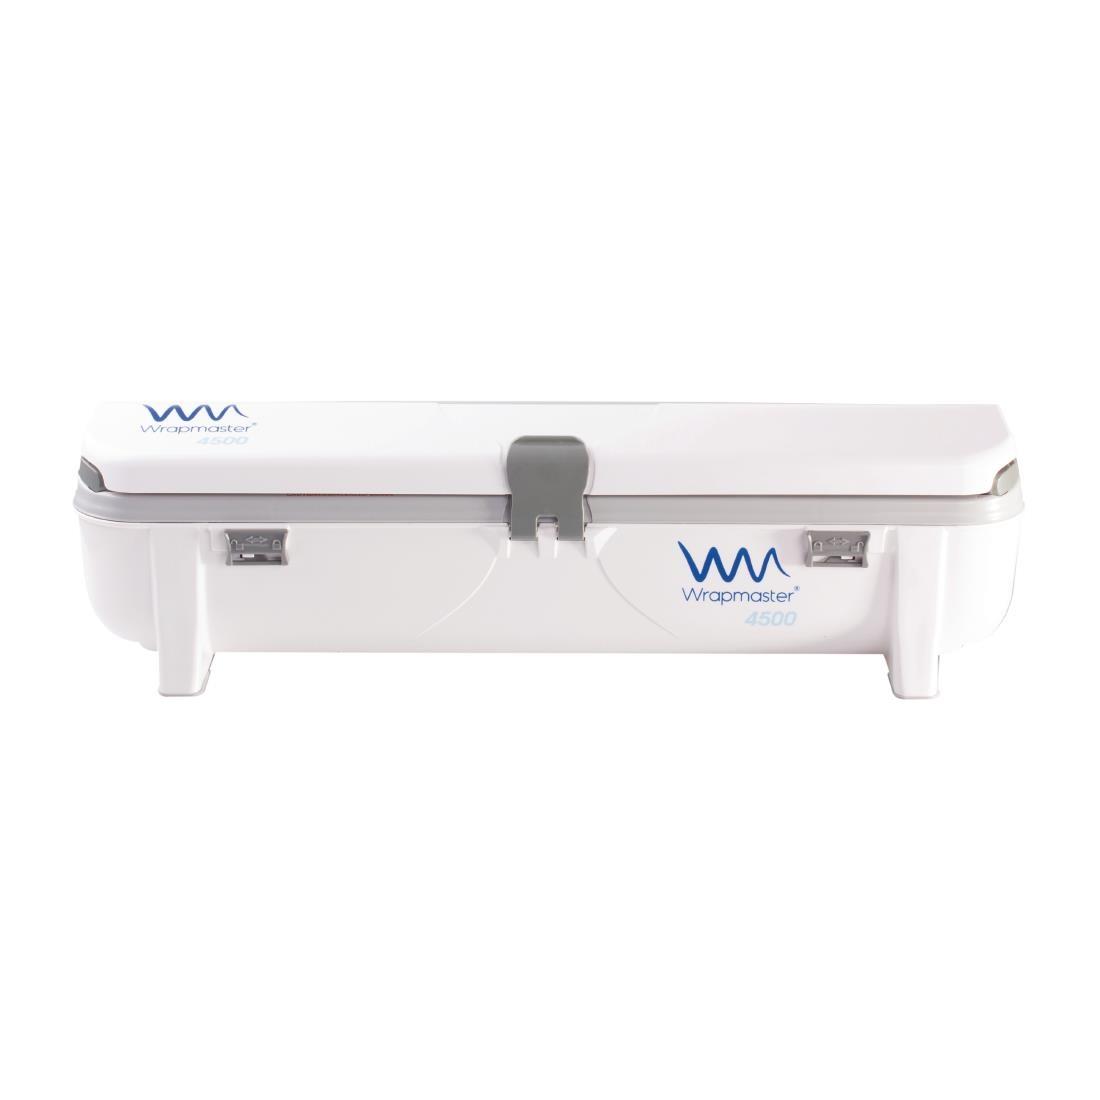 Wrapmaster 4500 Cling Film and Foil Dispenser - M802  - 2